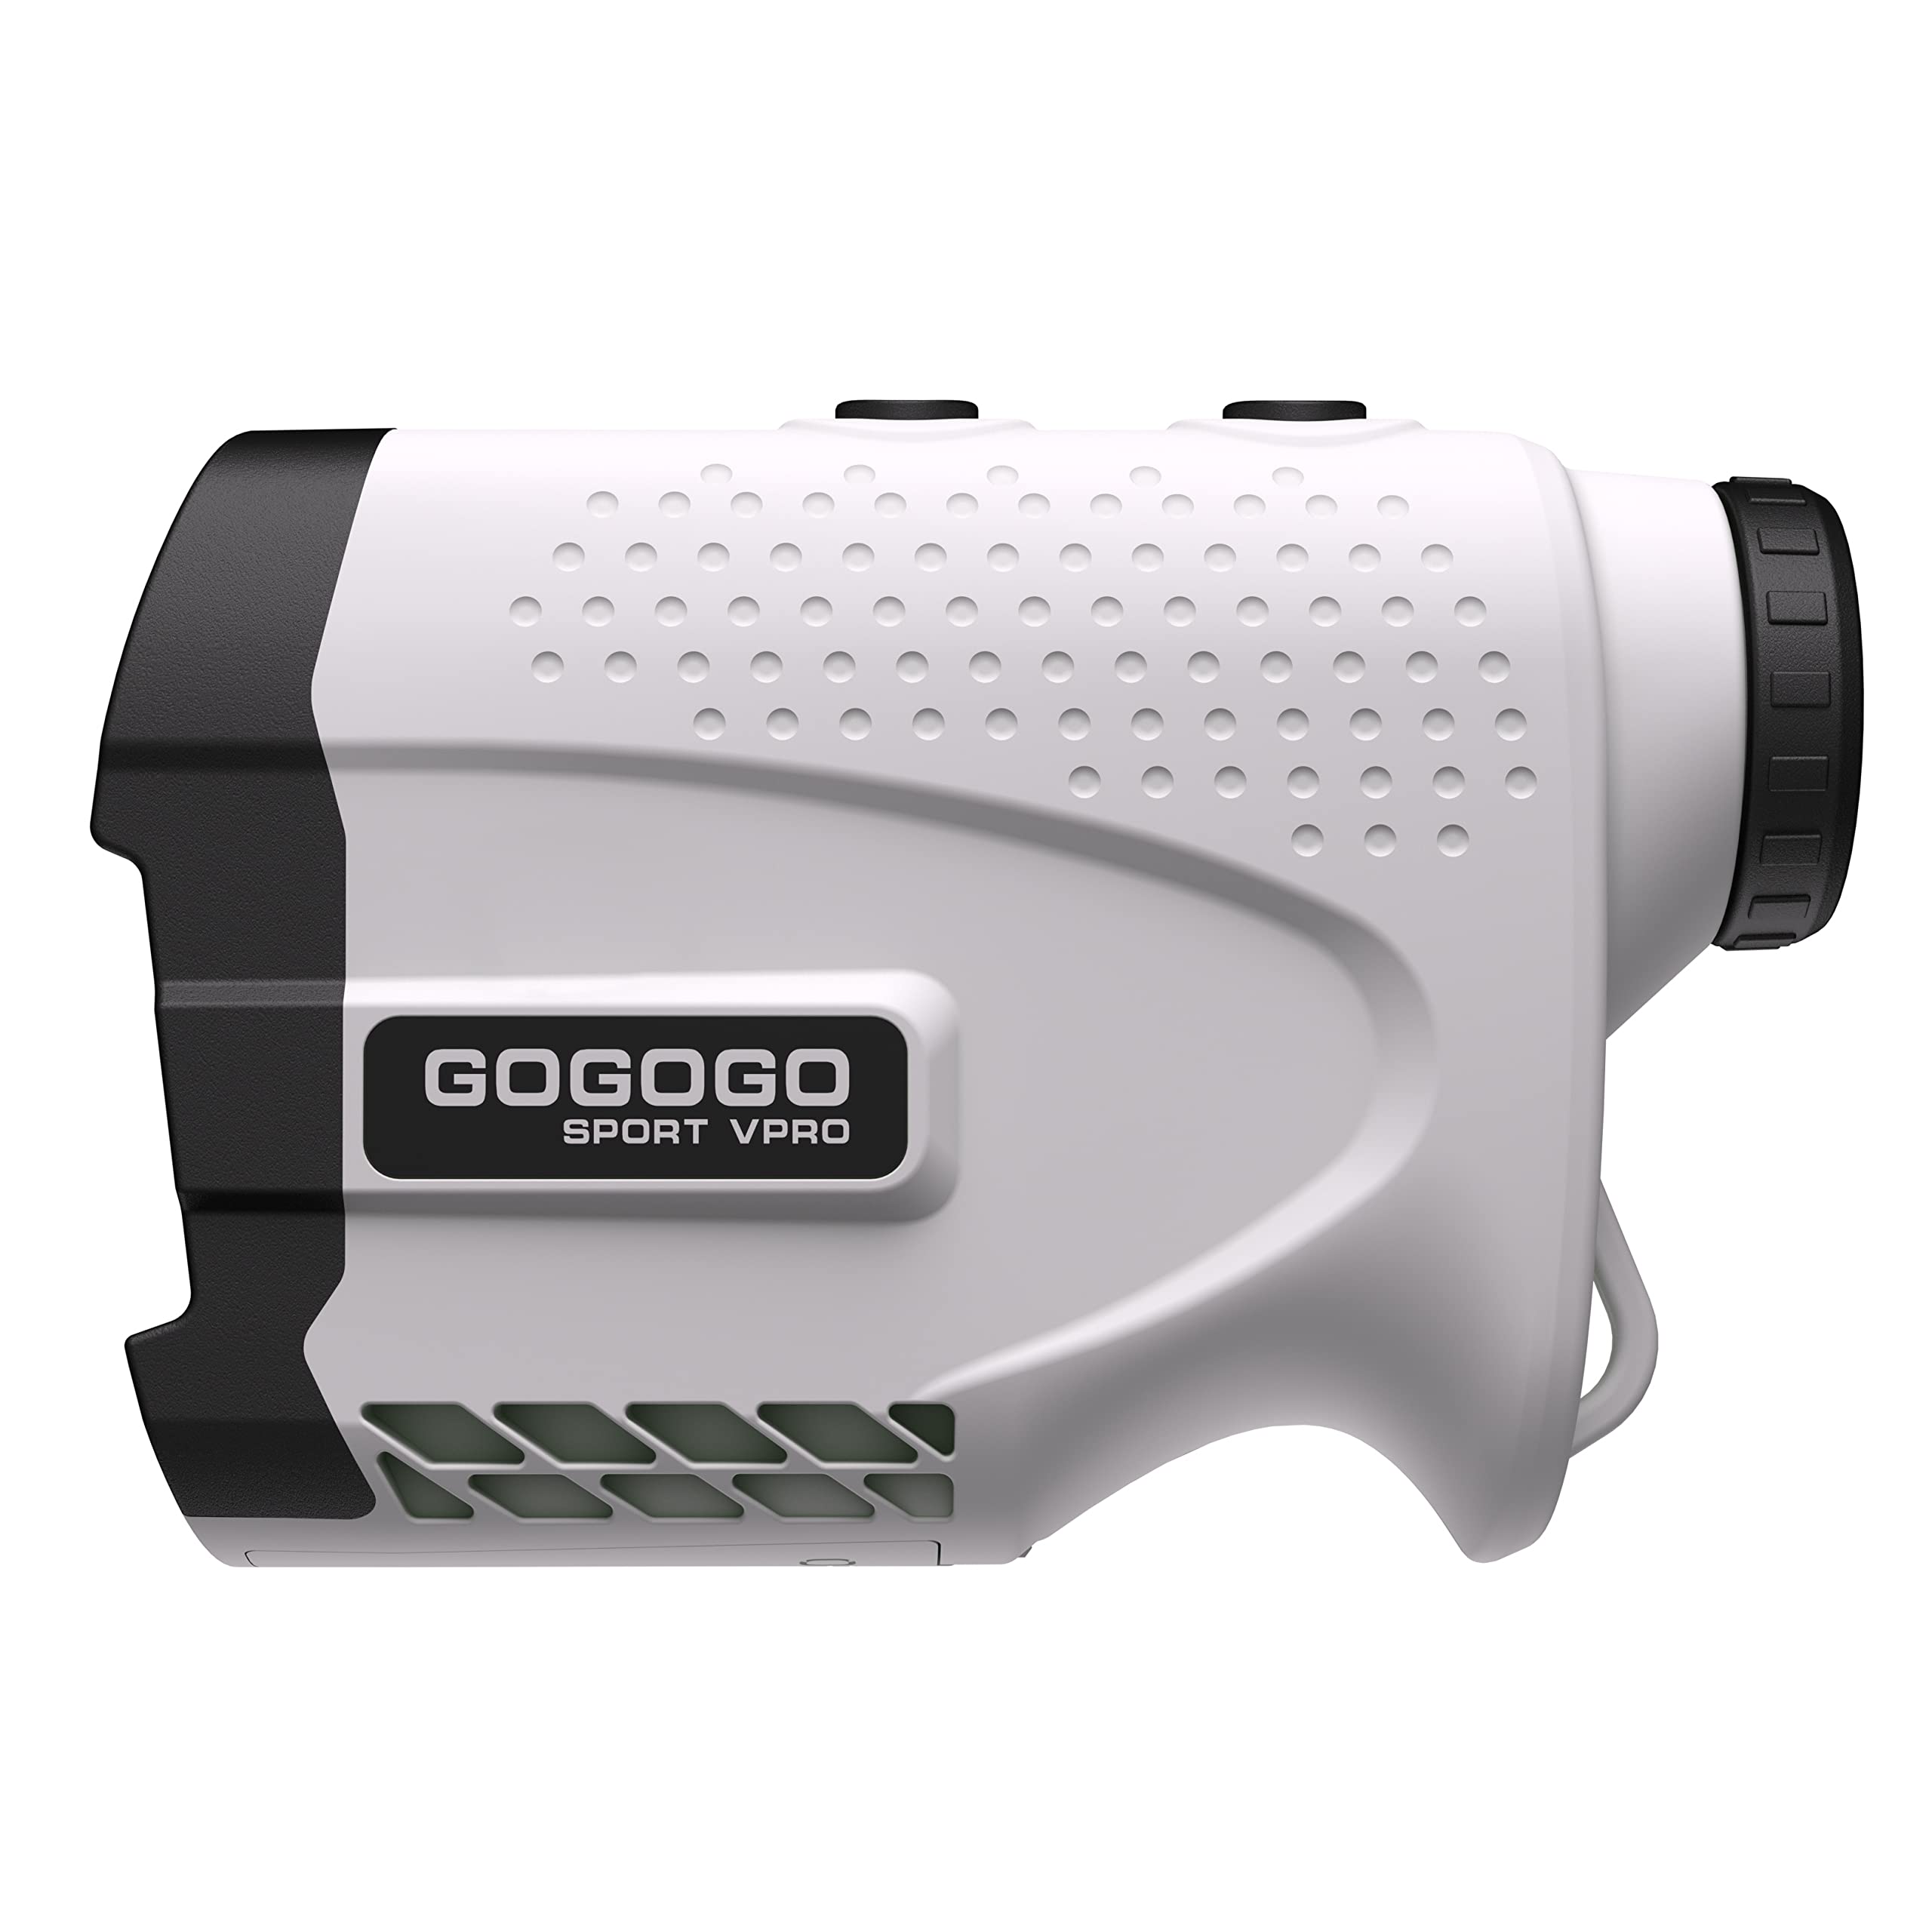 Gogogo Sport Vpro 用于高尔夫和狩猎的激光测距仪测距仪距离测量具有高精度旗杆锁定振动功能倾斜模式连续扫描